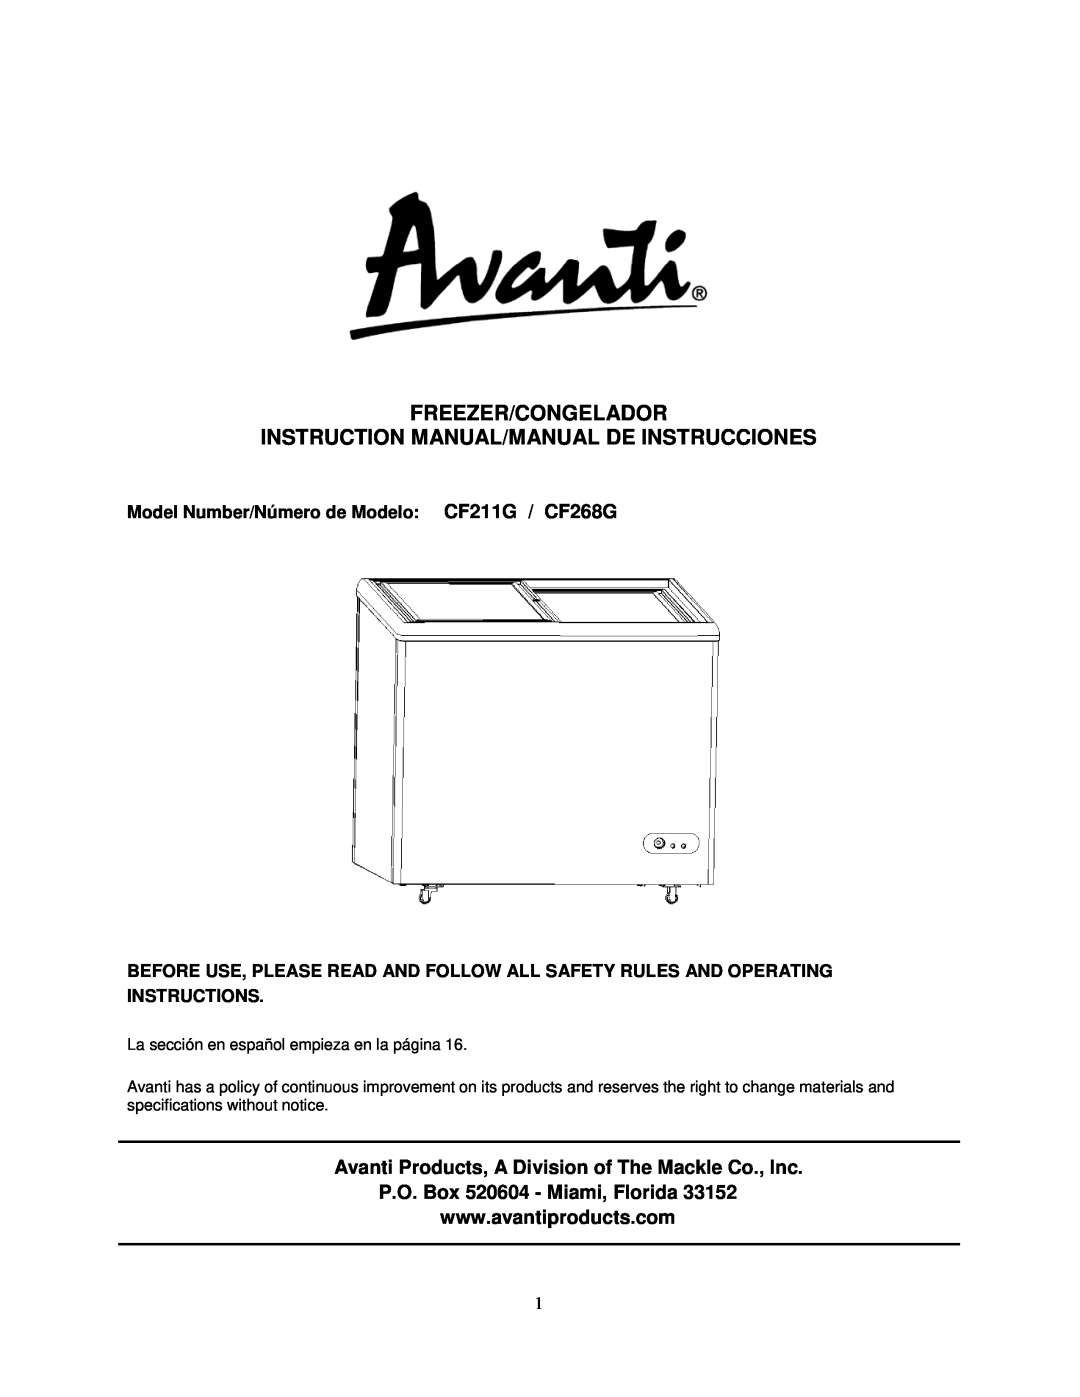 Avanti CF268G instruction manual Freezer/Congelador, P.O. Box 520604 - Miami, Florida 